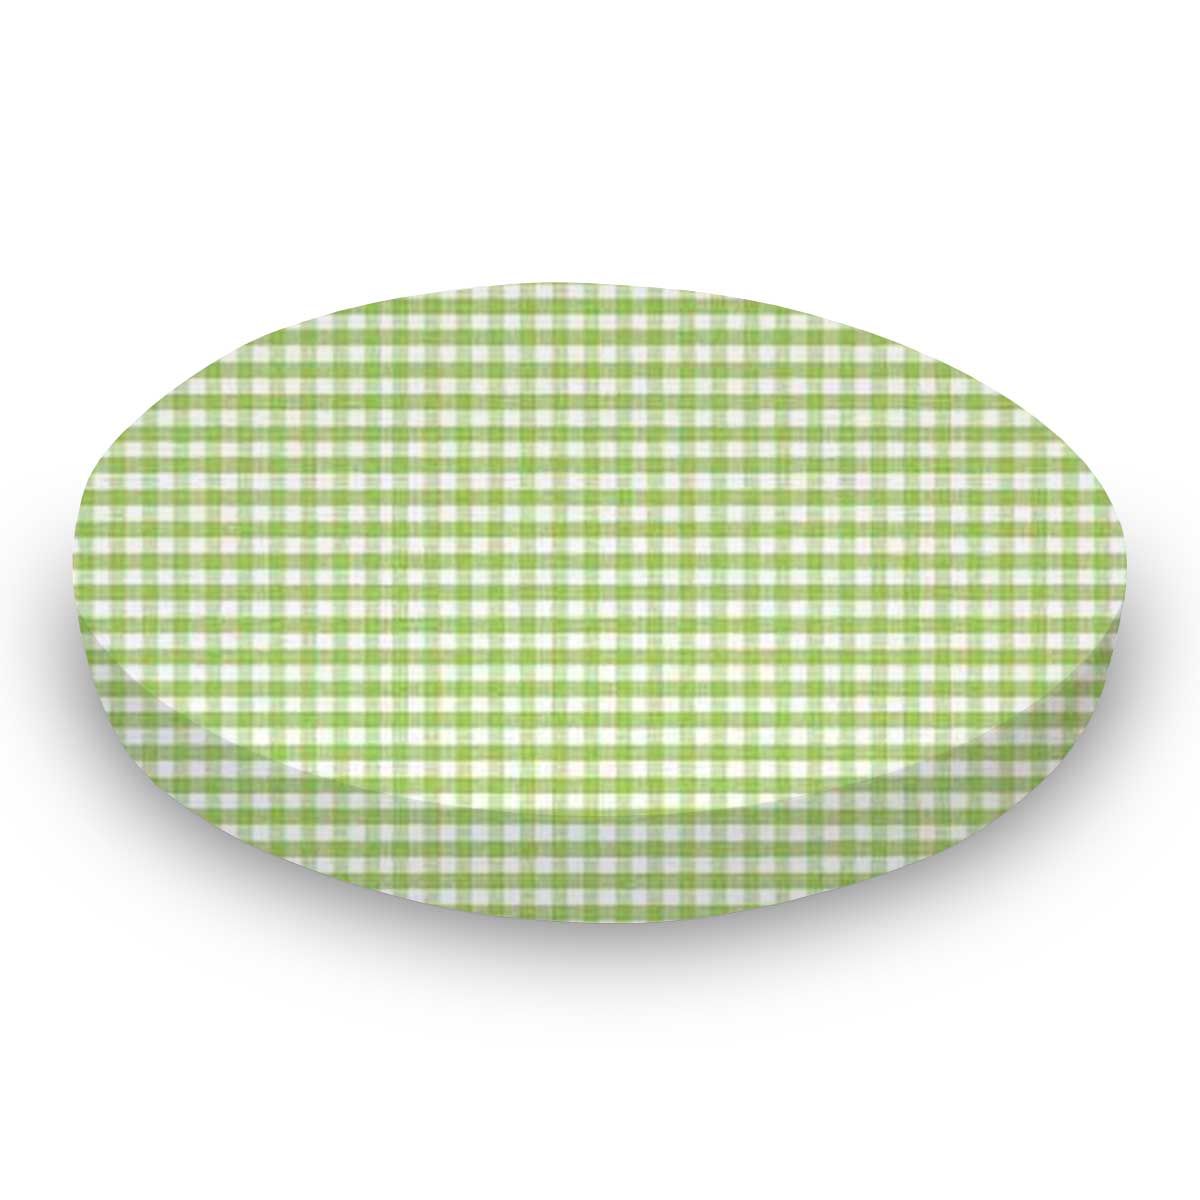 Oval Crib (Stokke Sleepi) - Sage Gingham Jersey Knit - Fitted  Oval